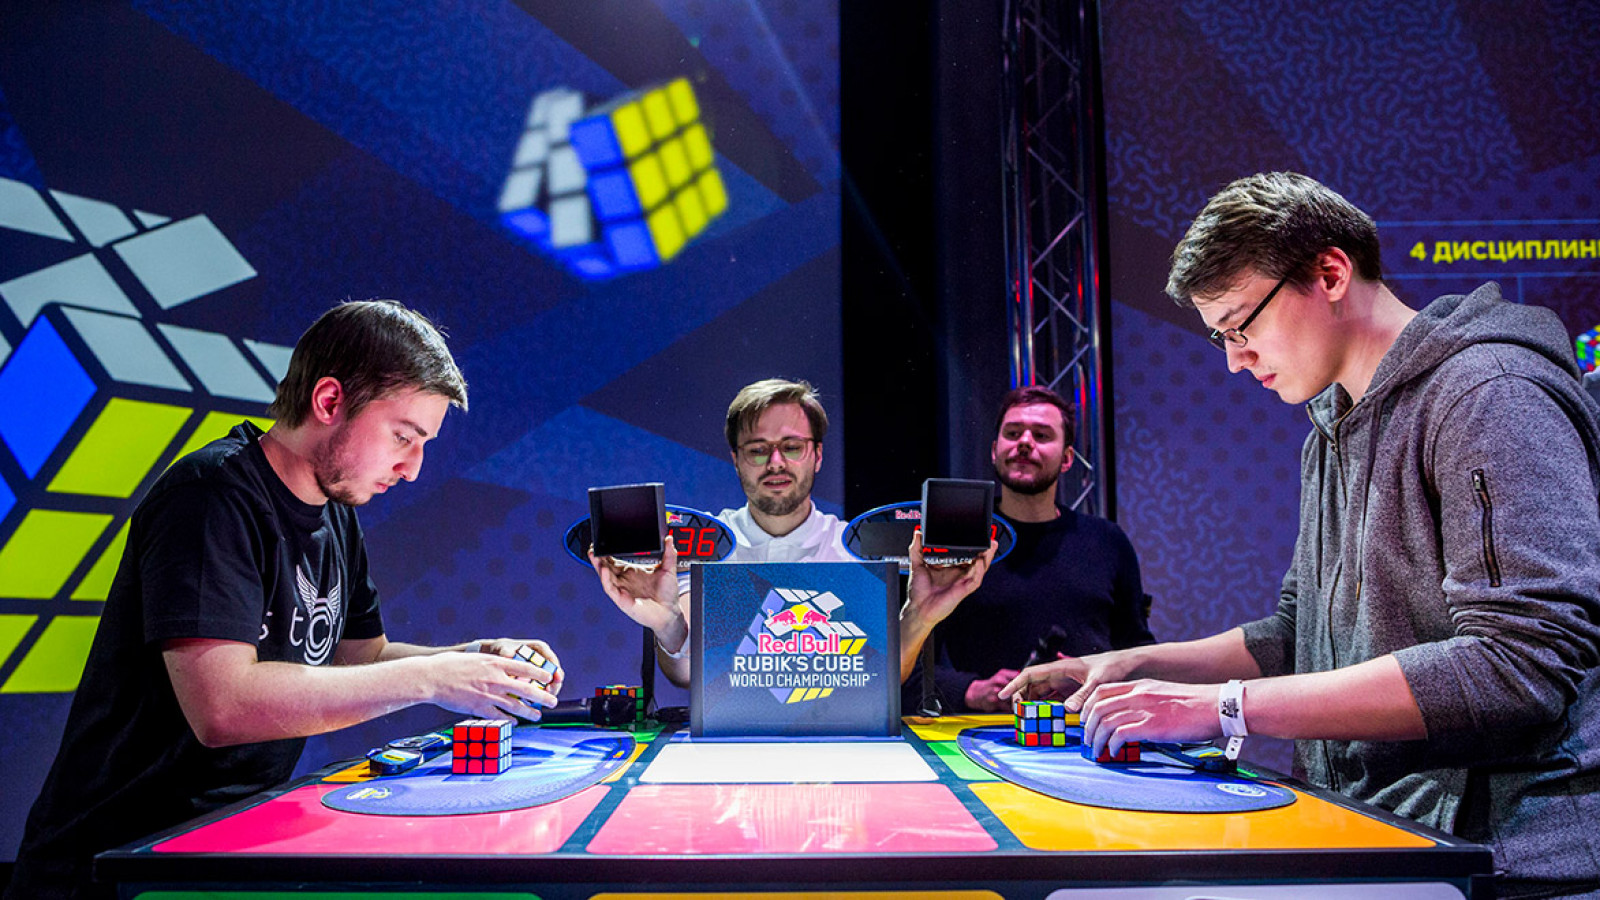 Red Bull Rubik’s Cube Championship